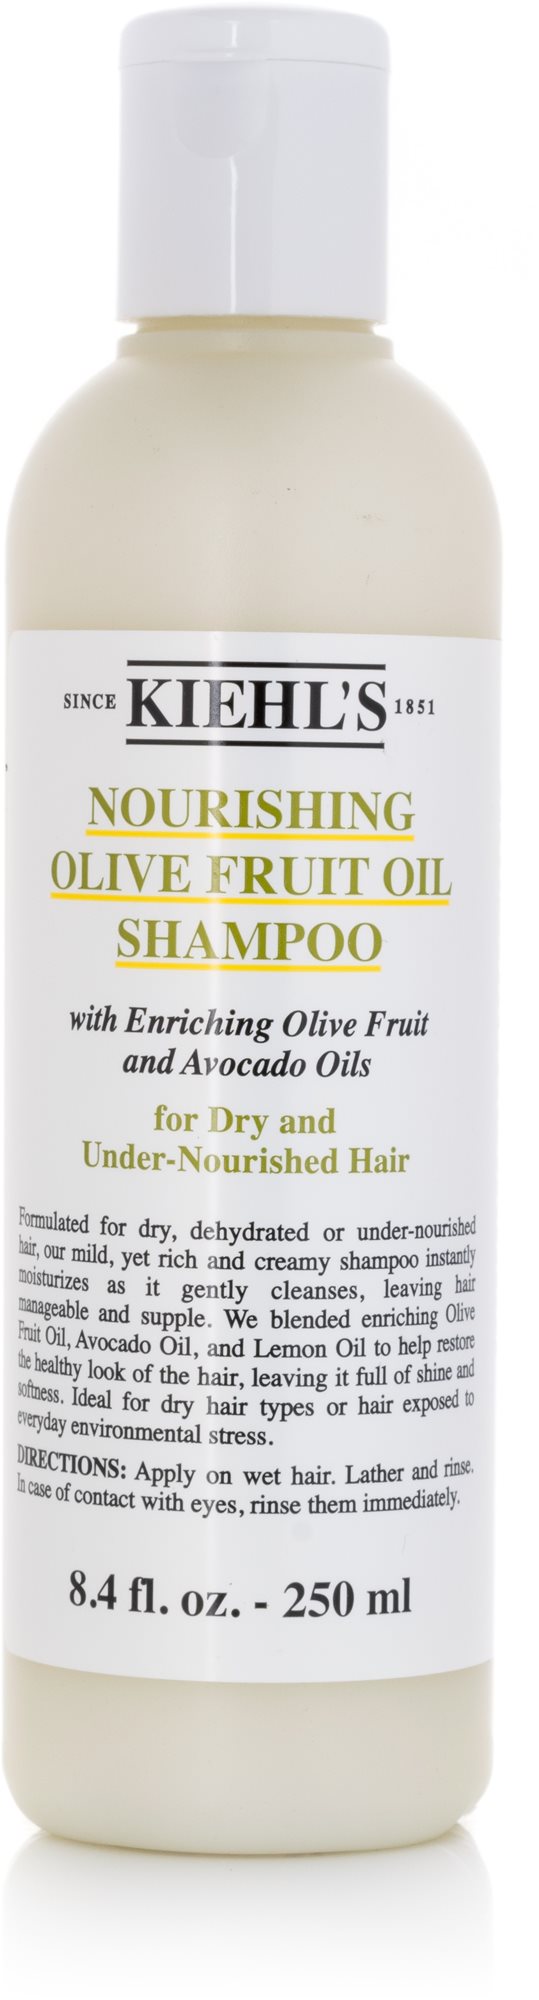 KIEHL'S Olive Fruit Oil Shampoo 250 ml